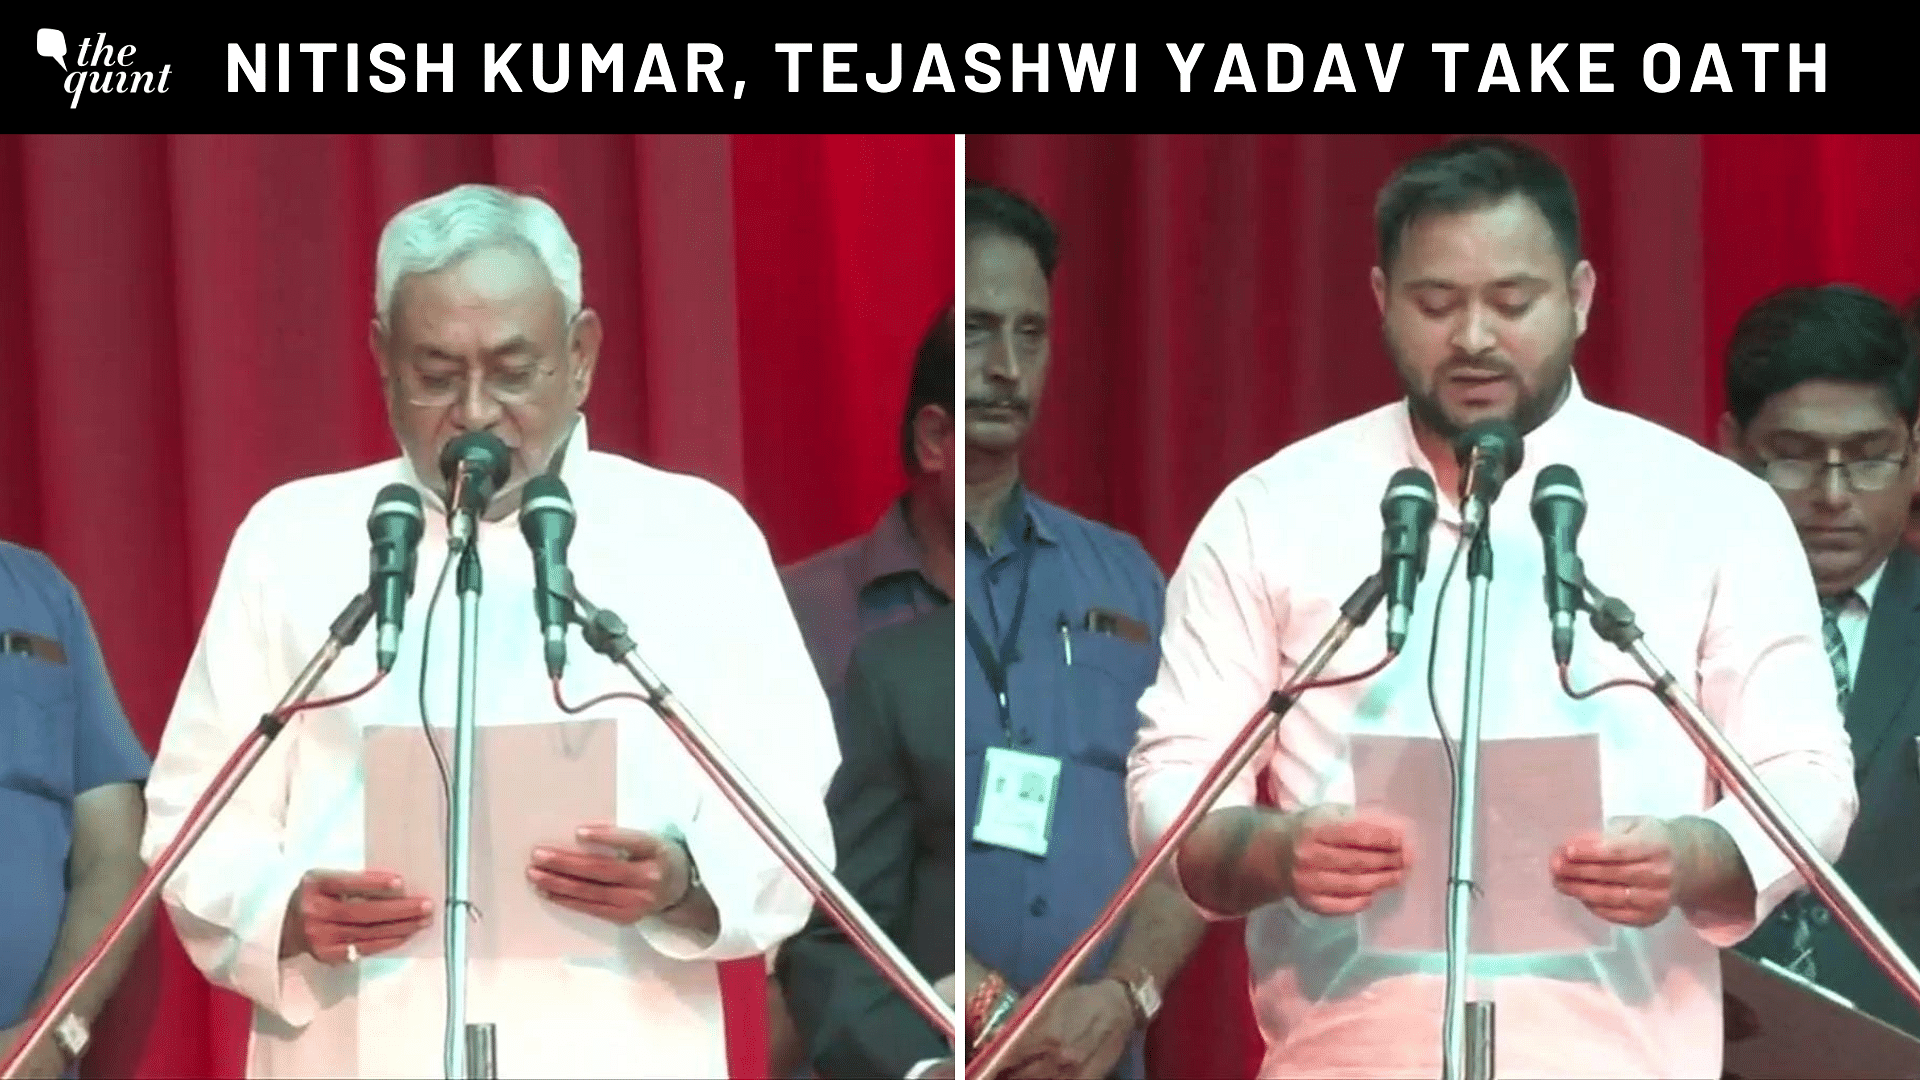 <div class="paragraphs"><p>Janata Dal (United) chief <a href="https://www.thequint.com/topic/nitish-kumar">Nitish Kumar</a> on Wednesday, 10 August, took oath as chief minister of <a href="https://www.thequint.com/topic/bihar">Bihar</a>, along with Rashtriya Janata Dal leader Tejashwi Yadav, who was sworn in as the deputy CM.</p></div>